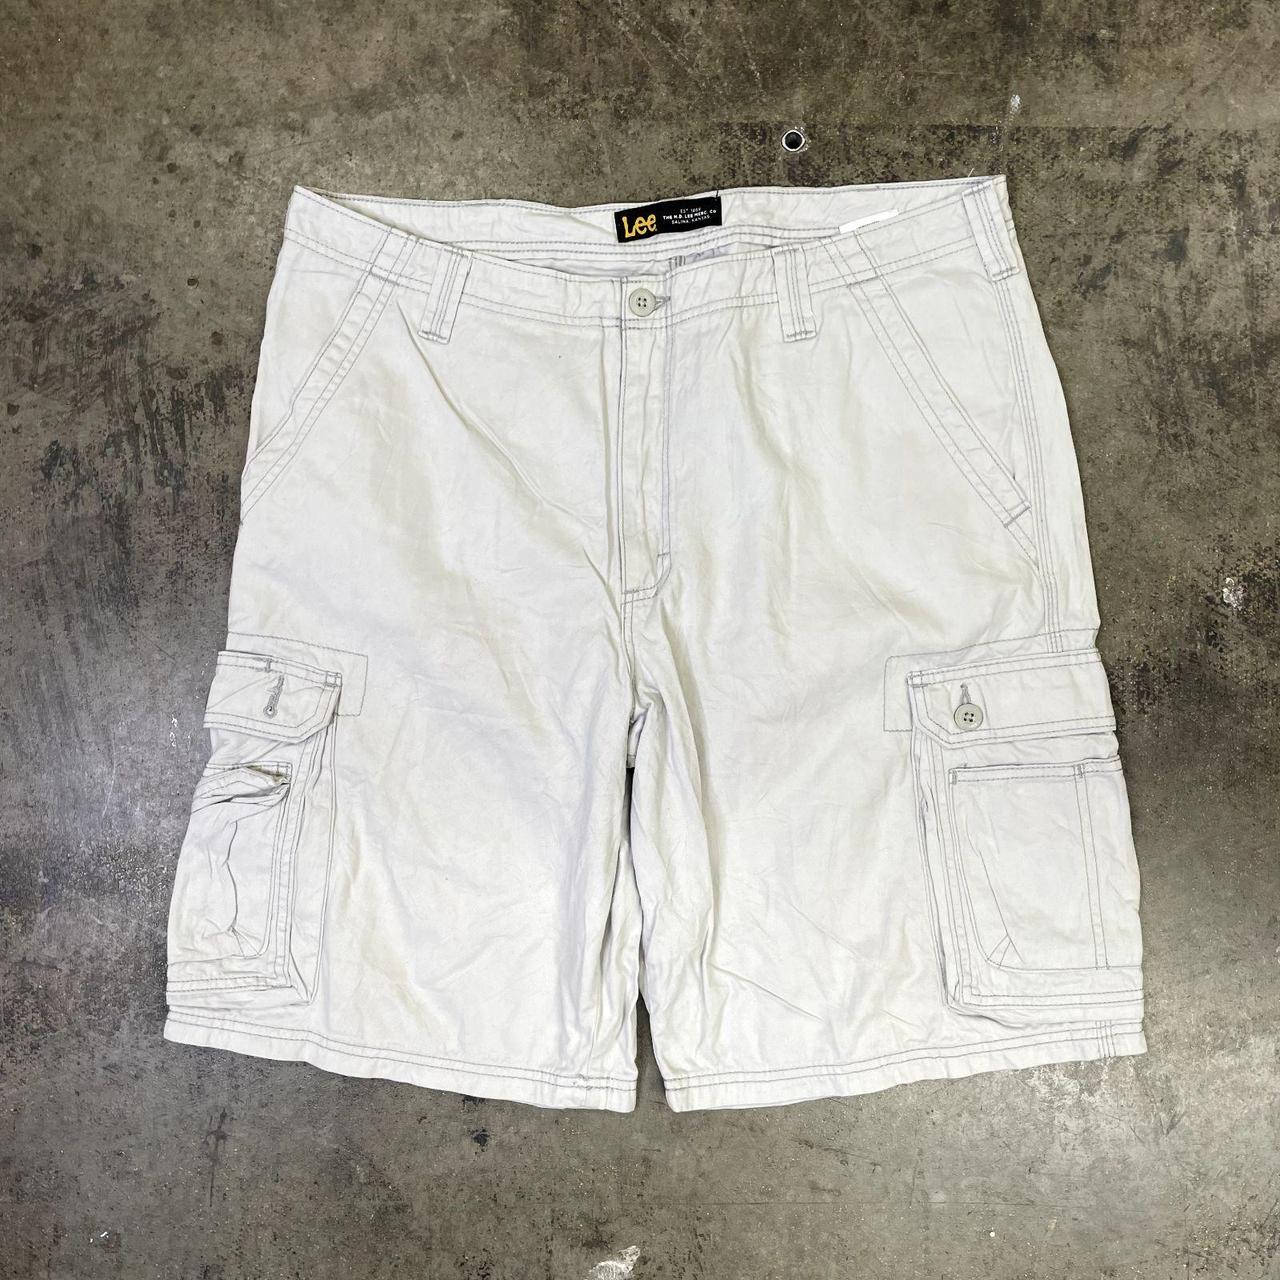 Lee Shorts Cargo 90s Vintage Summer Outdoors Shorts,... - Depop